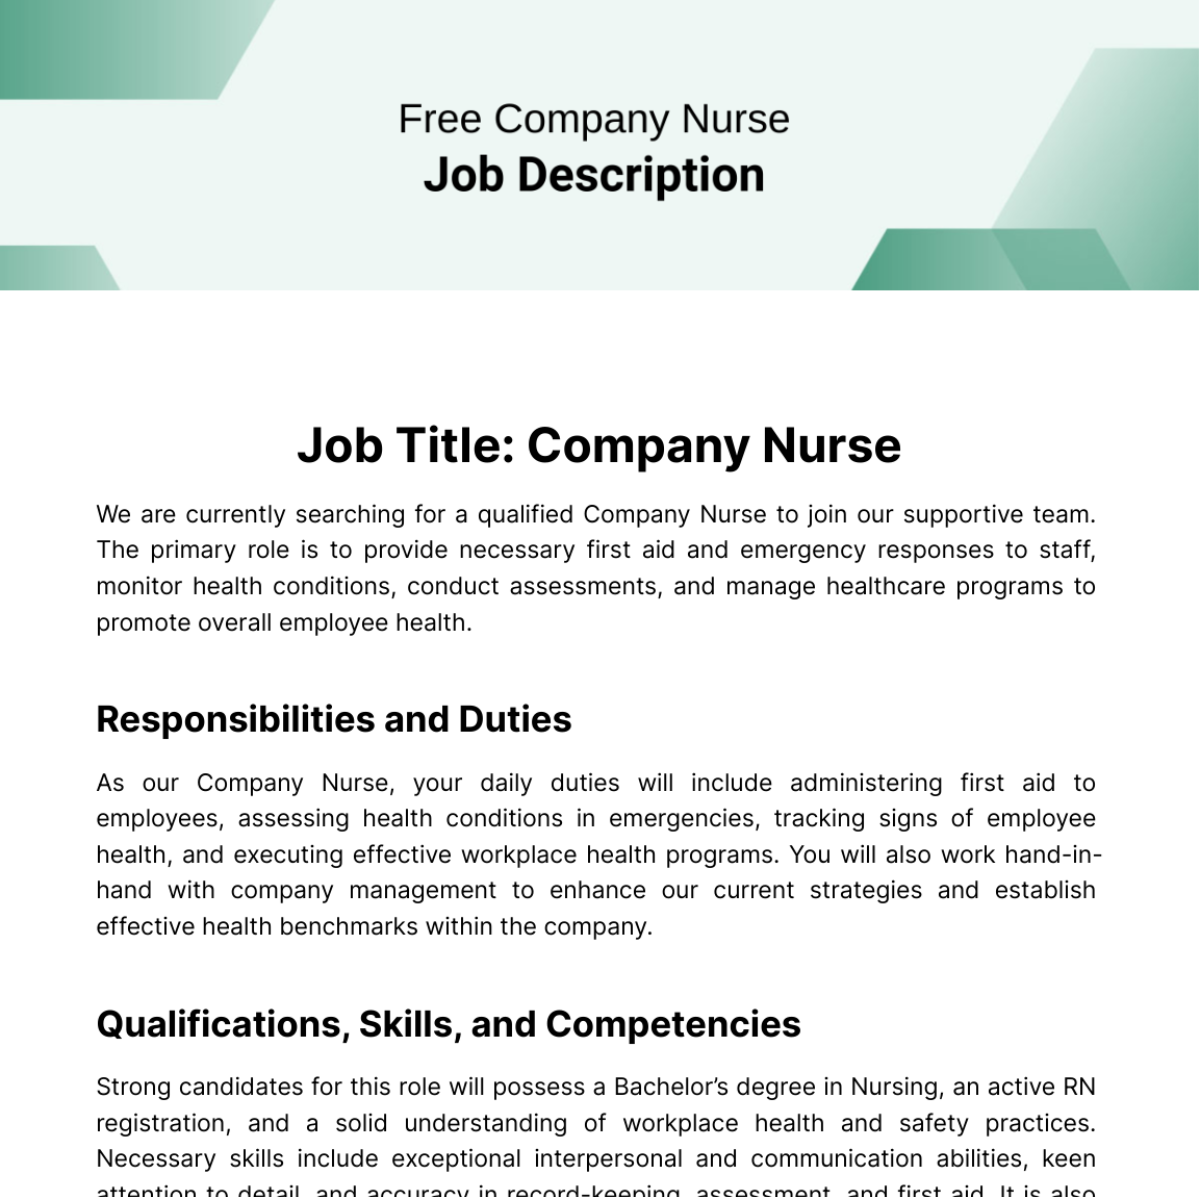 Free Company Nurse Job Description Template